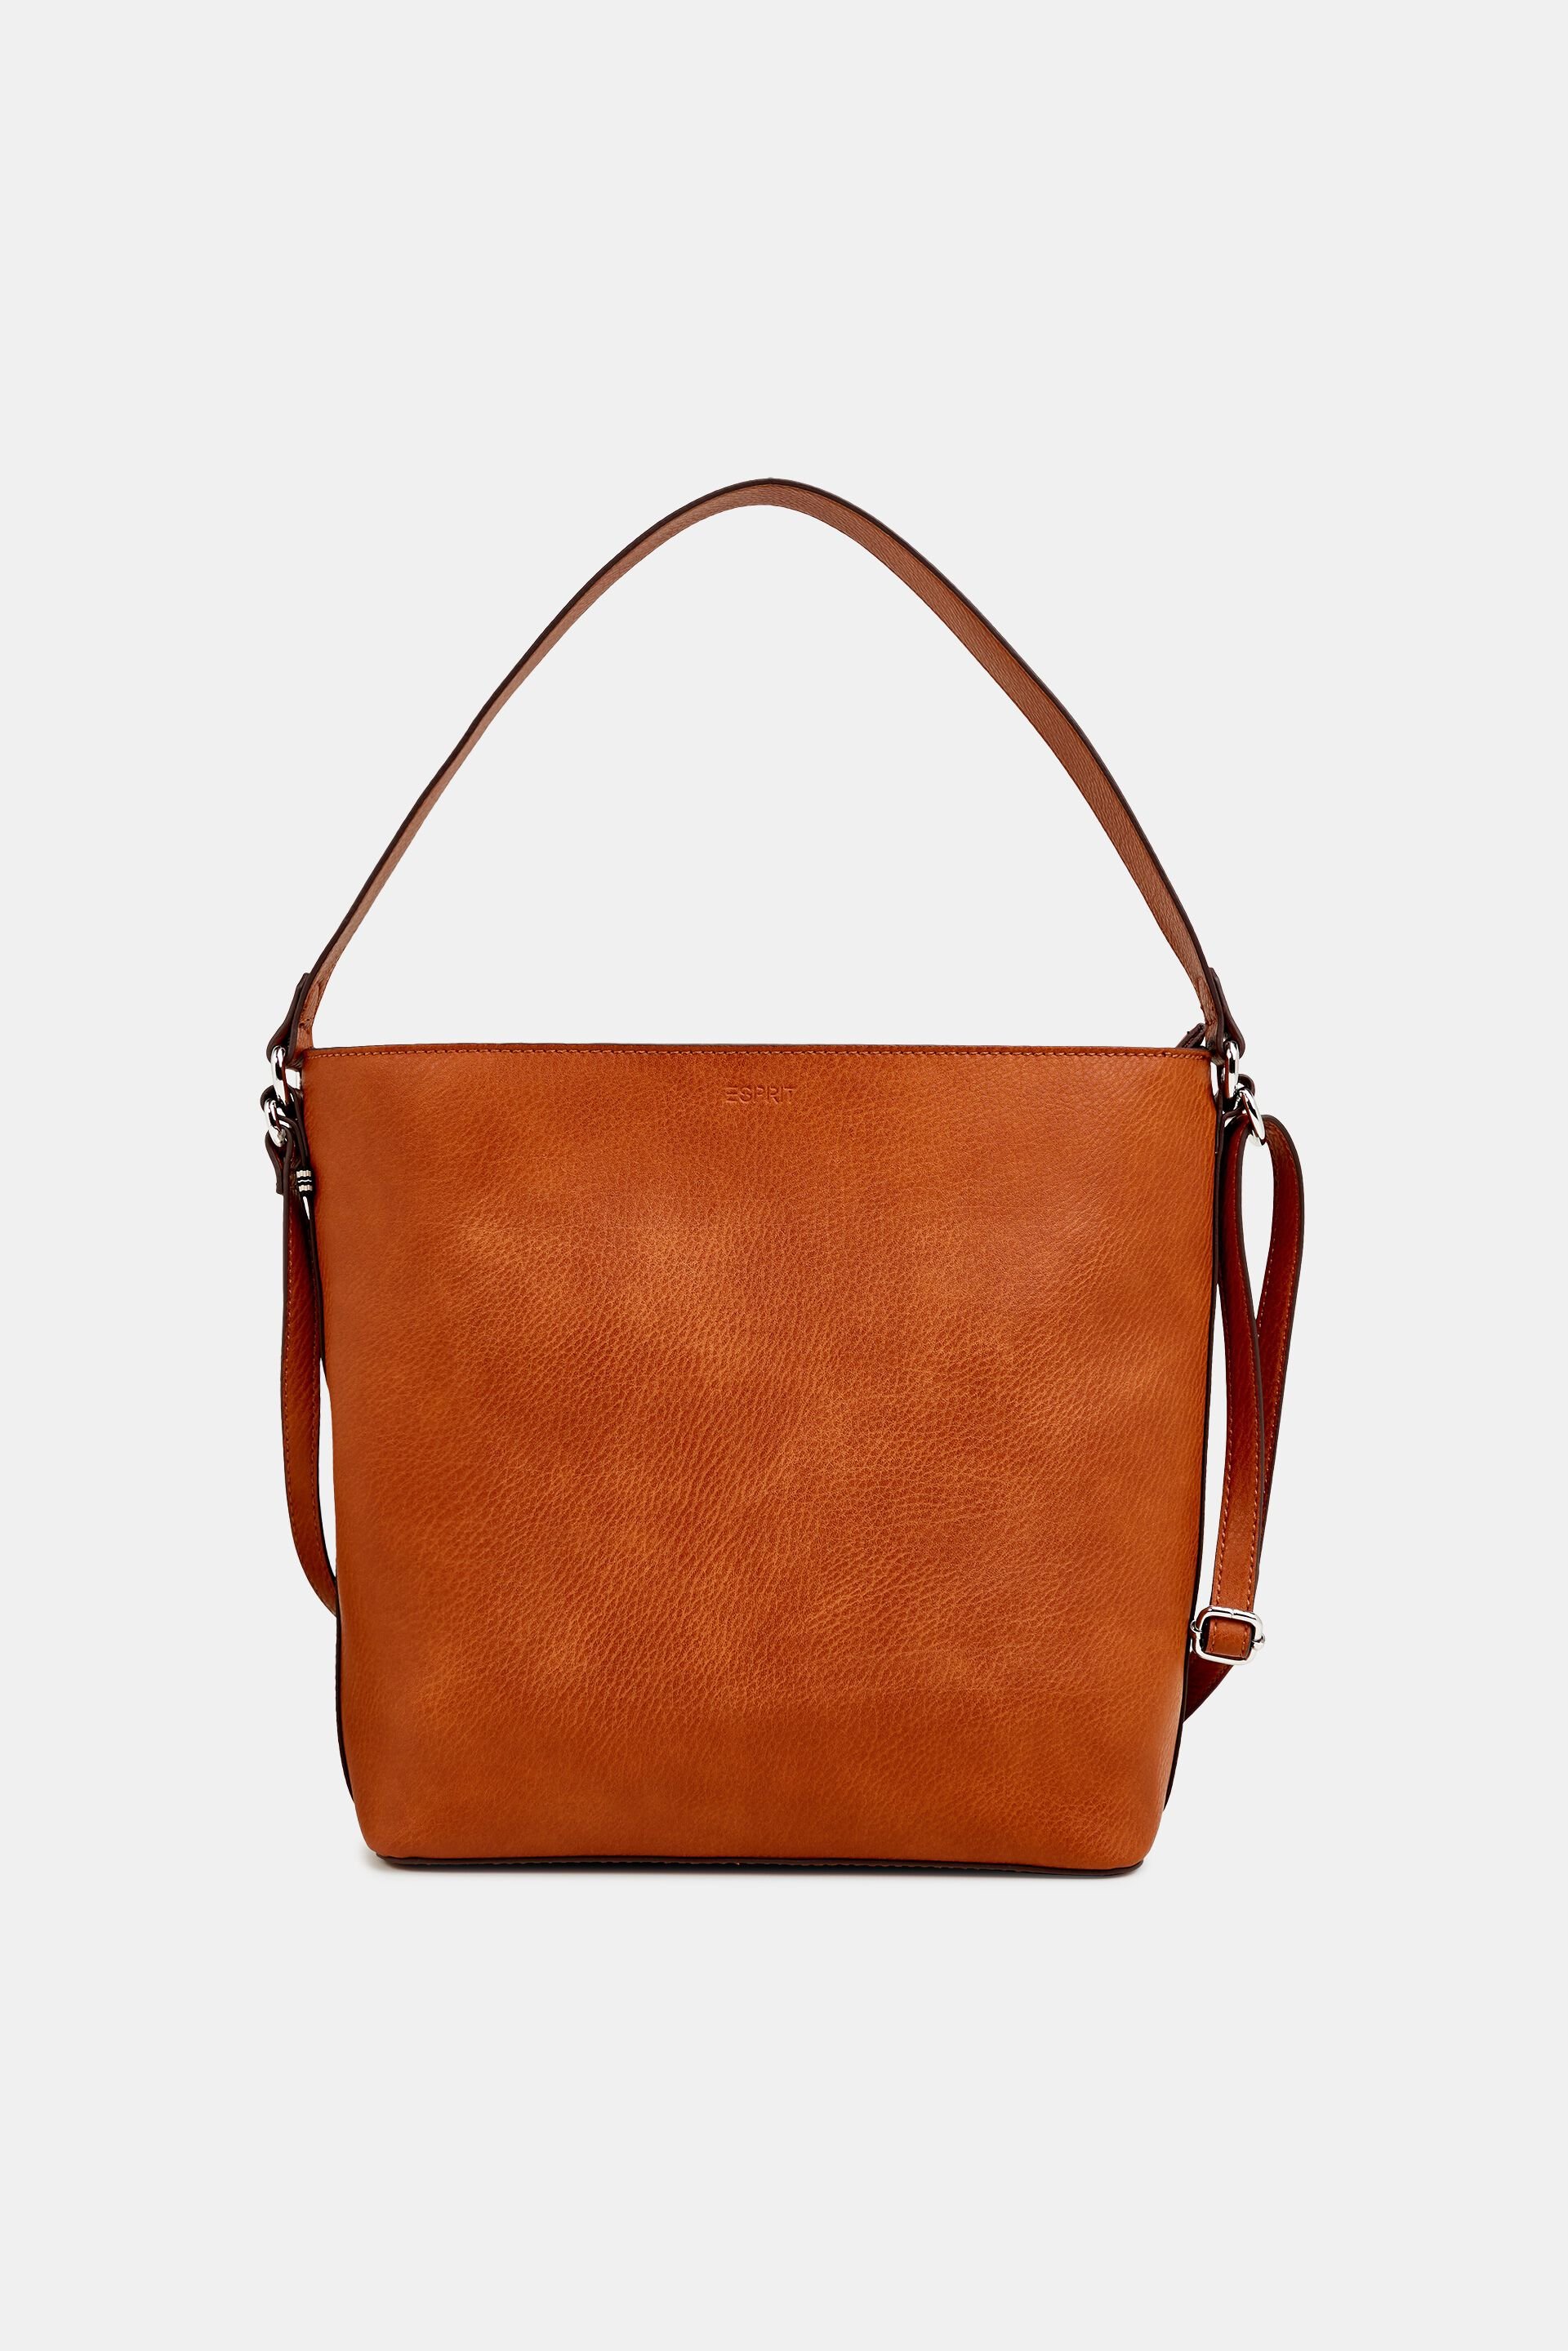 Esprit Online Store Vegan: Faux leather hobo bag